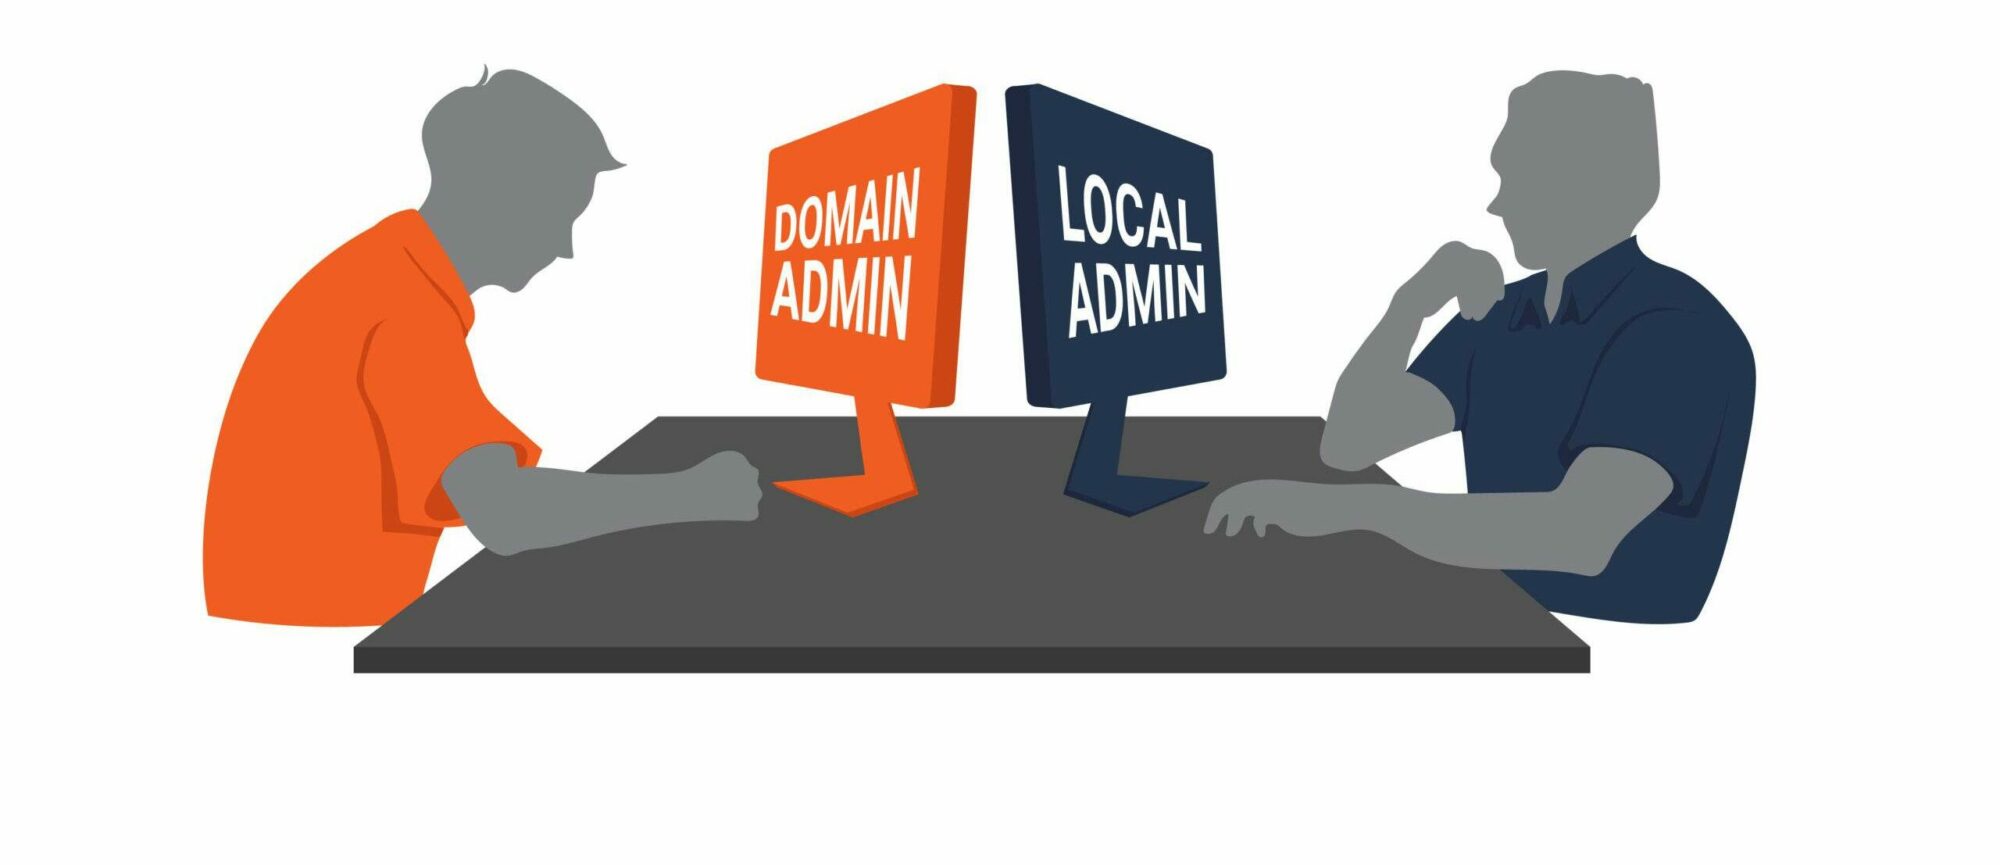 Domain administrator privileges